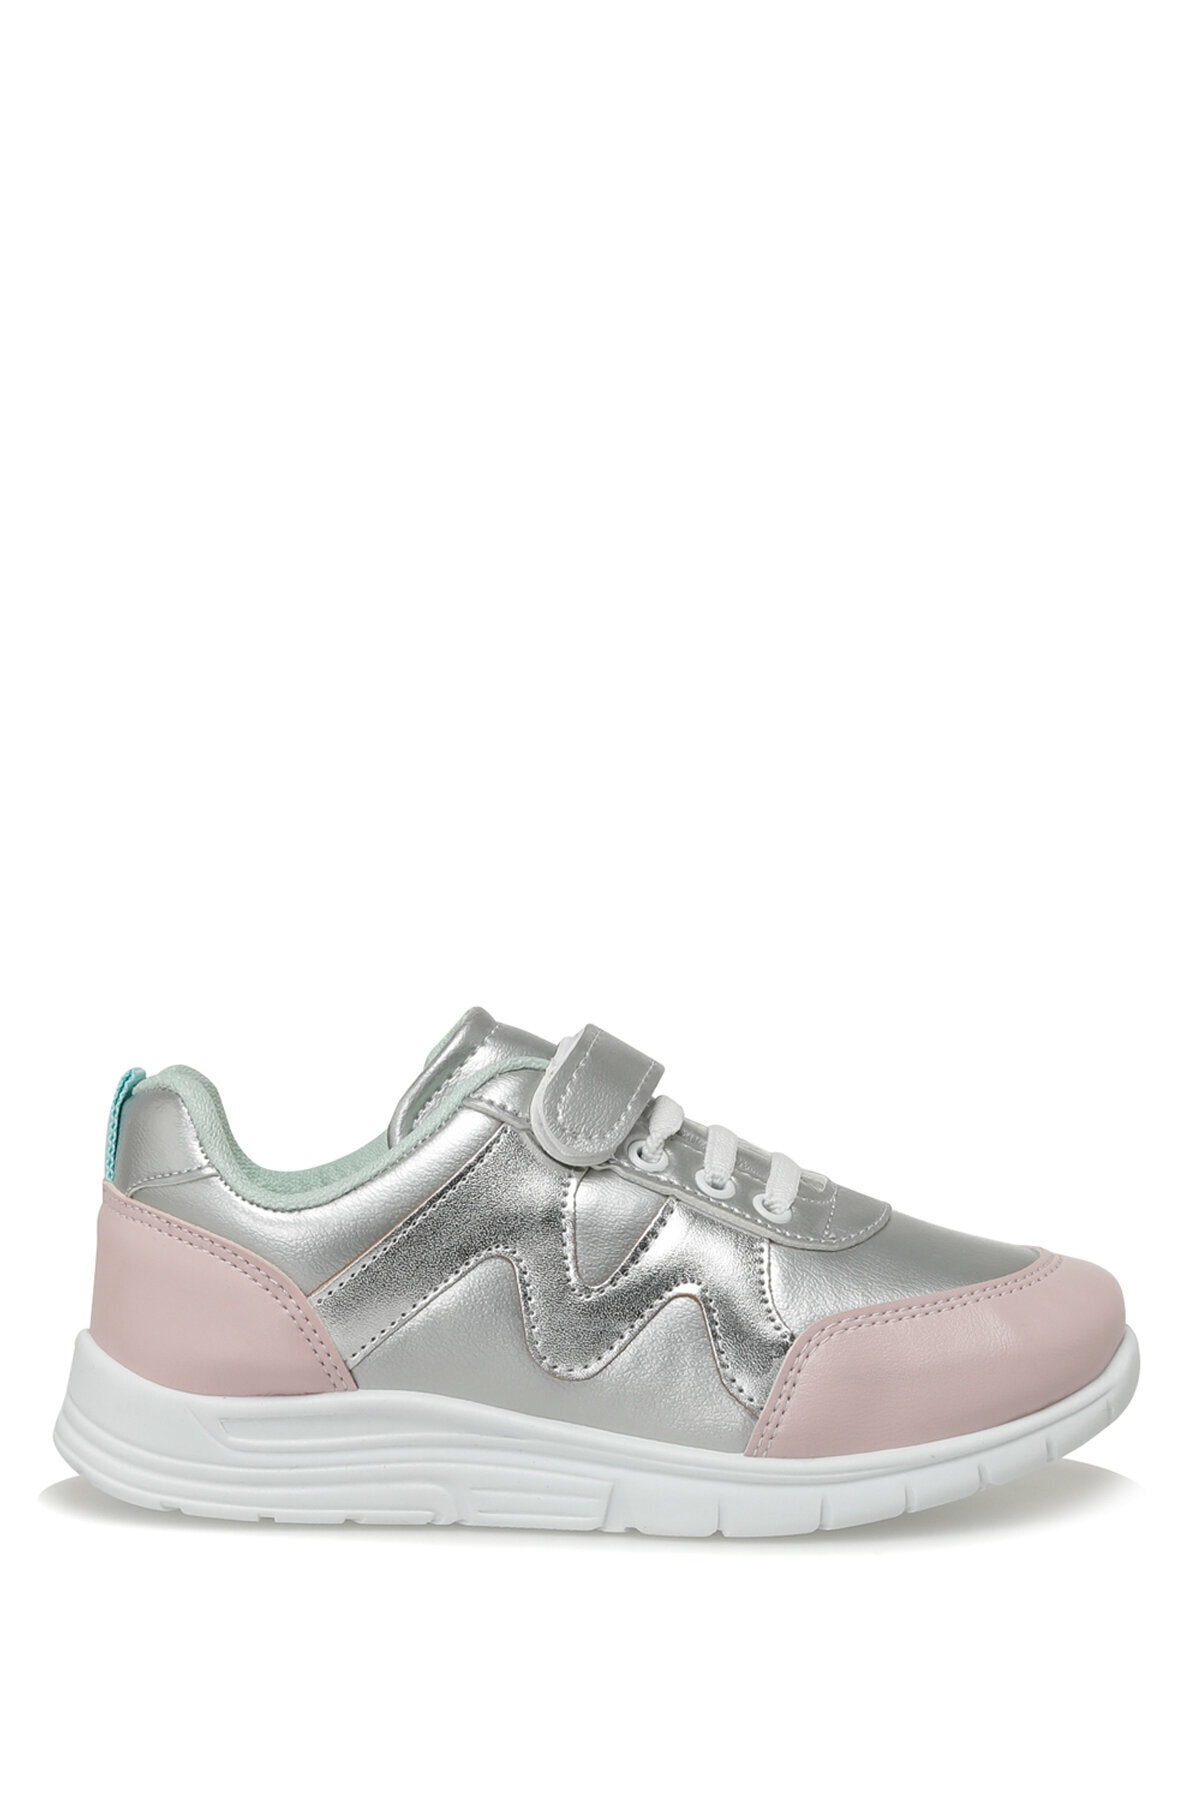 Polaris 624135.F3FX Gray Girls' Sneakers